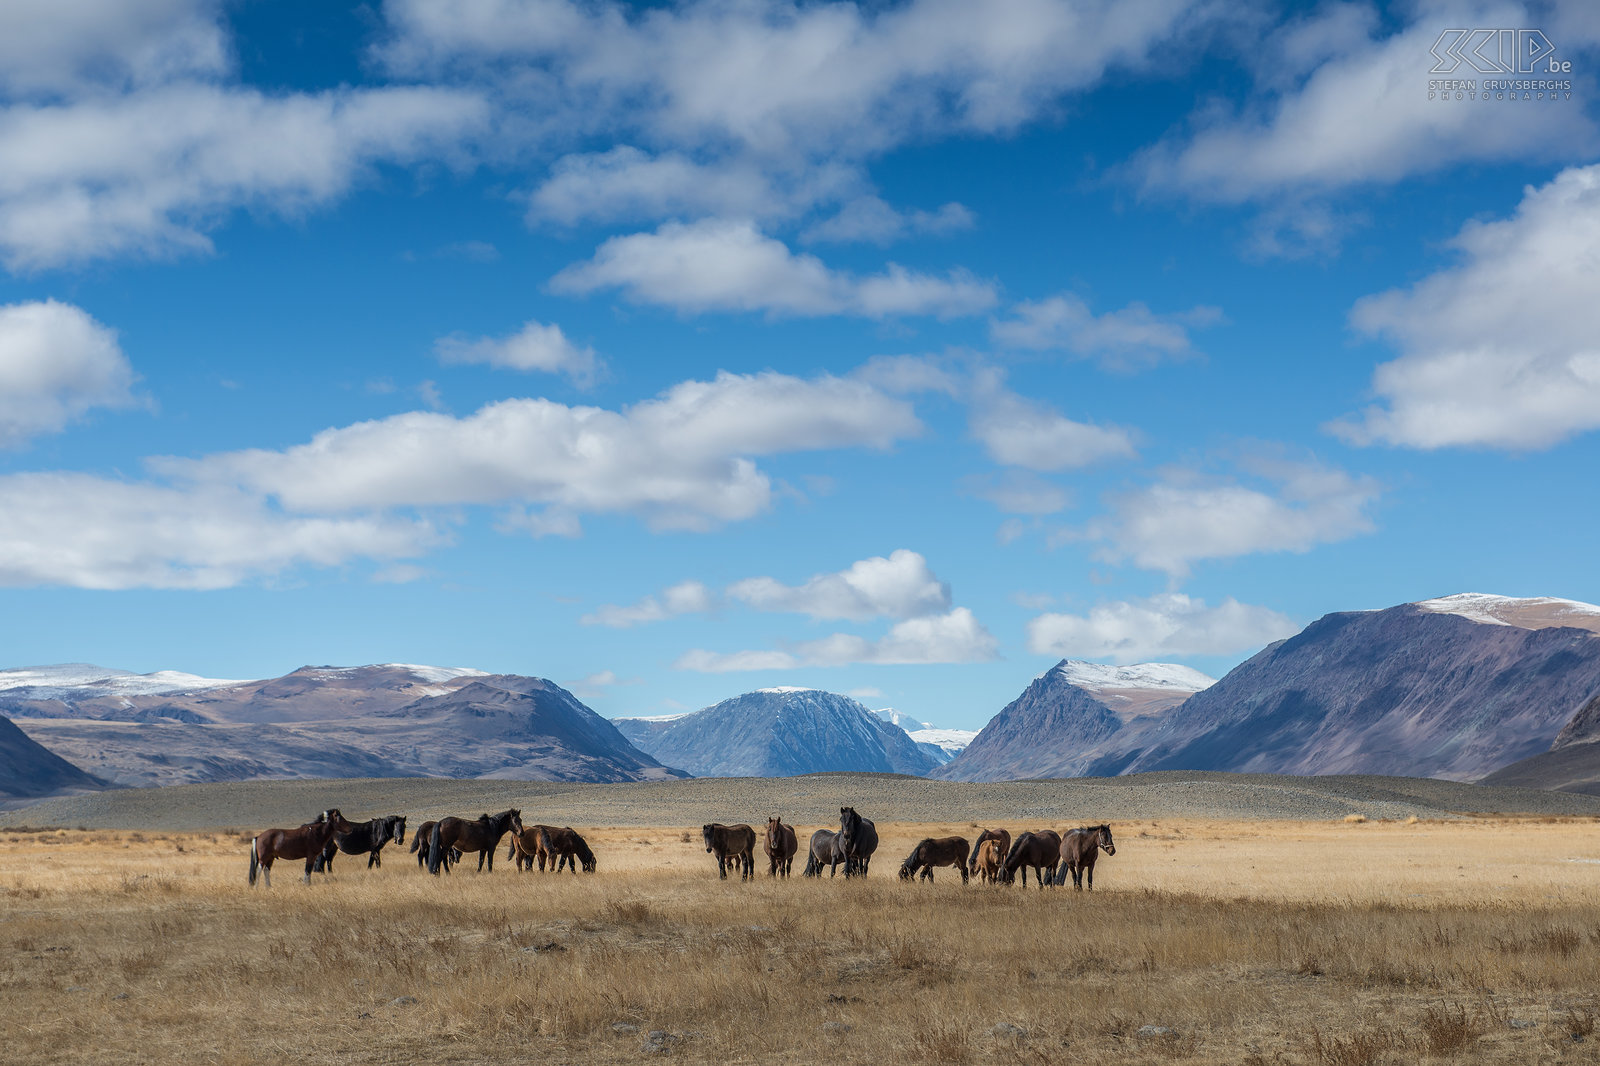 Altai Tavan Bogd - Horses  Stefan Cruysberghs